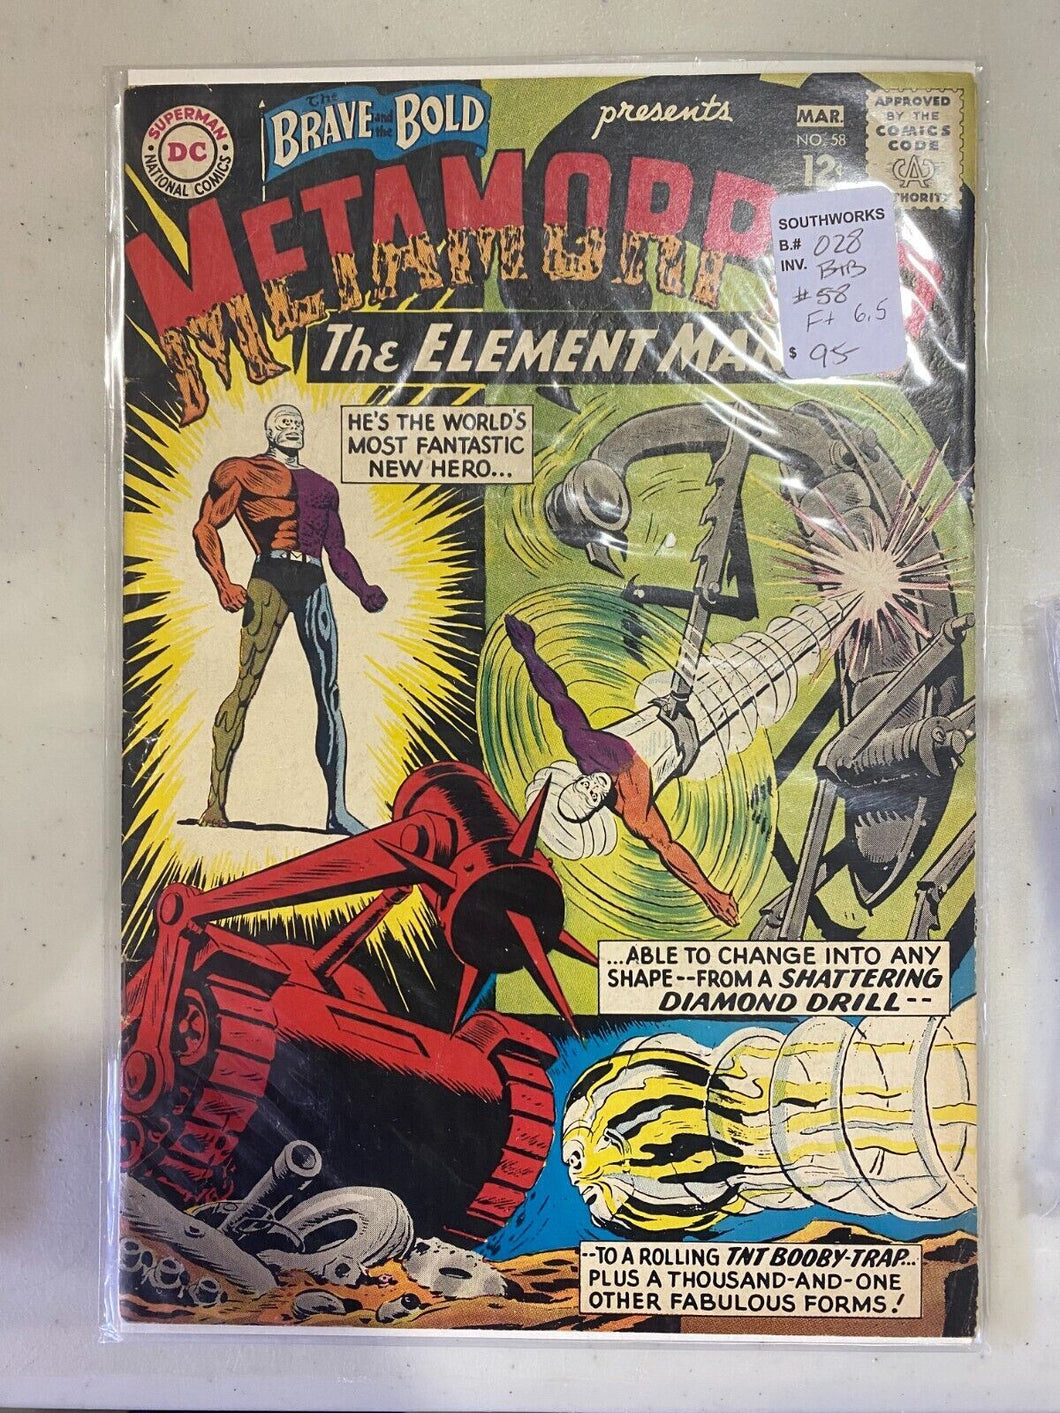 1965 DC Comics Metamorphio The Element Man Issue 58